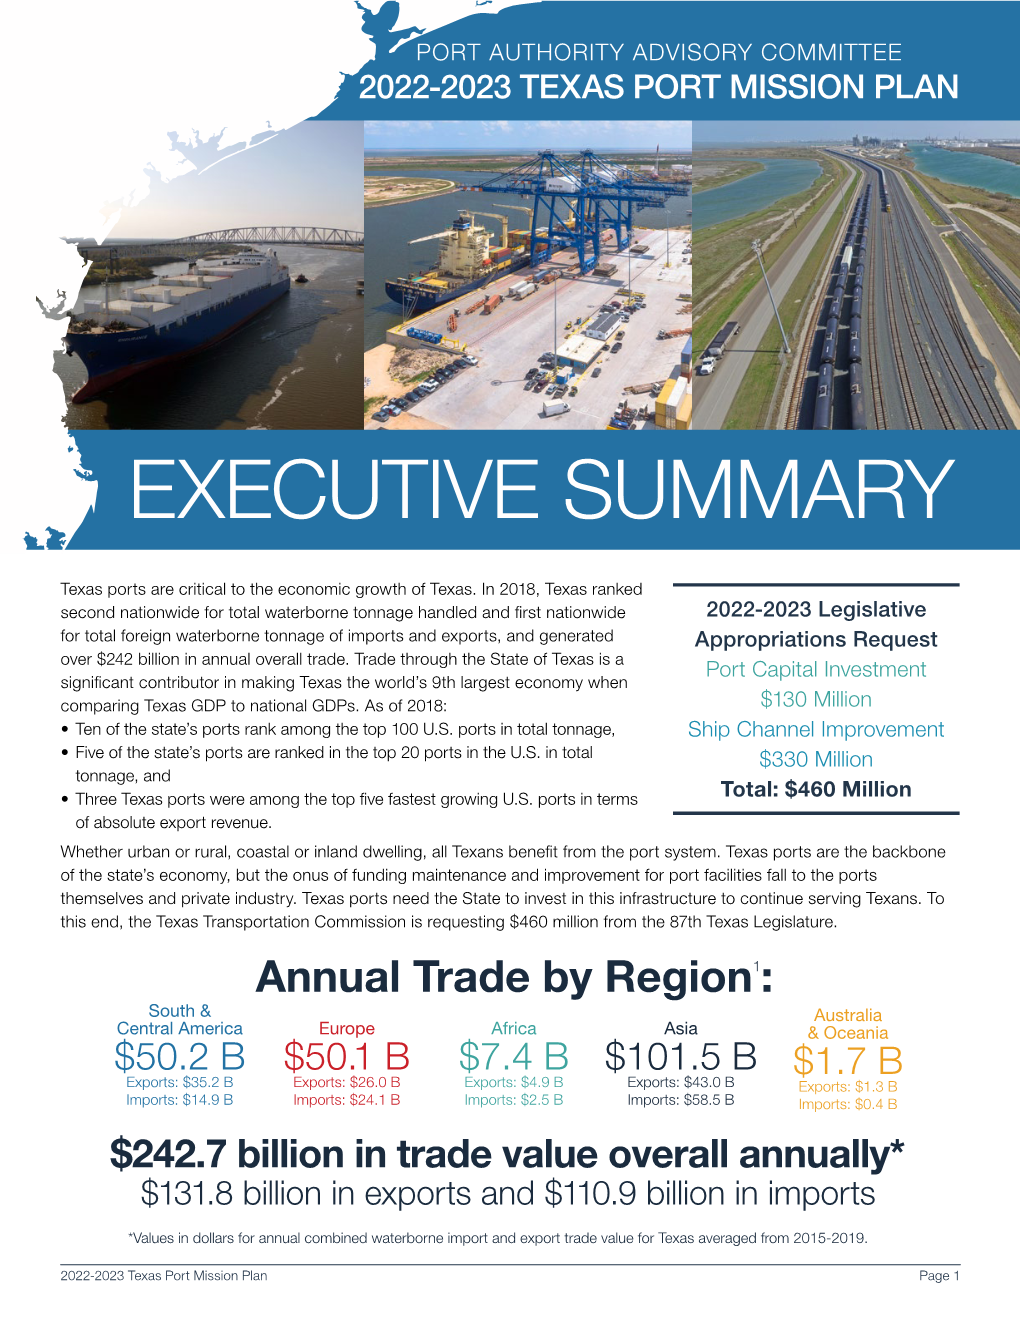 2022-2023 Texas Port Mission Plan Executive Summary